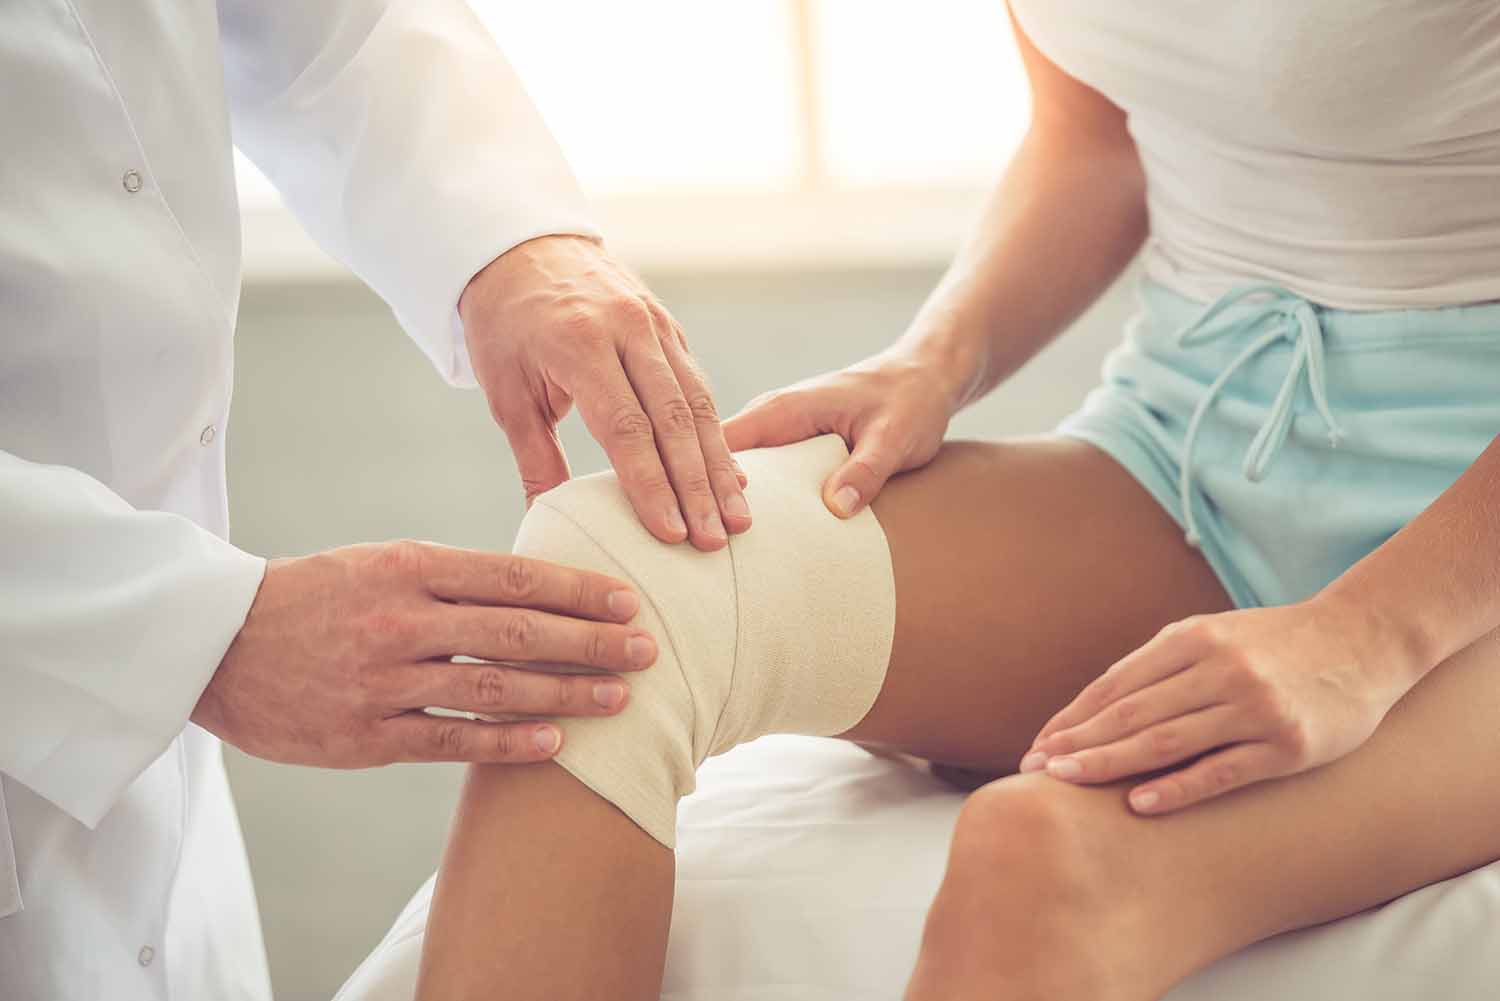 orthopedic surgeon bandaging woman's knee